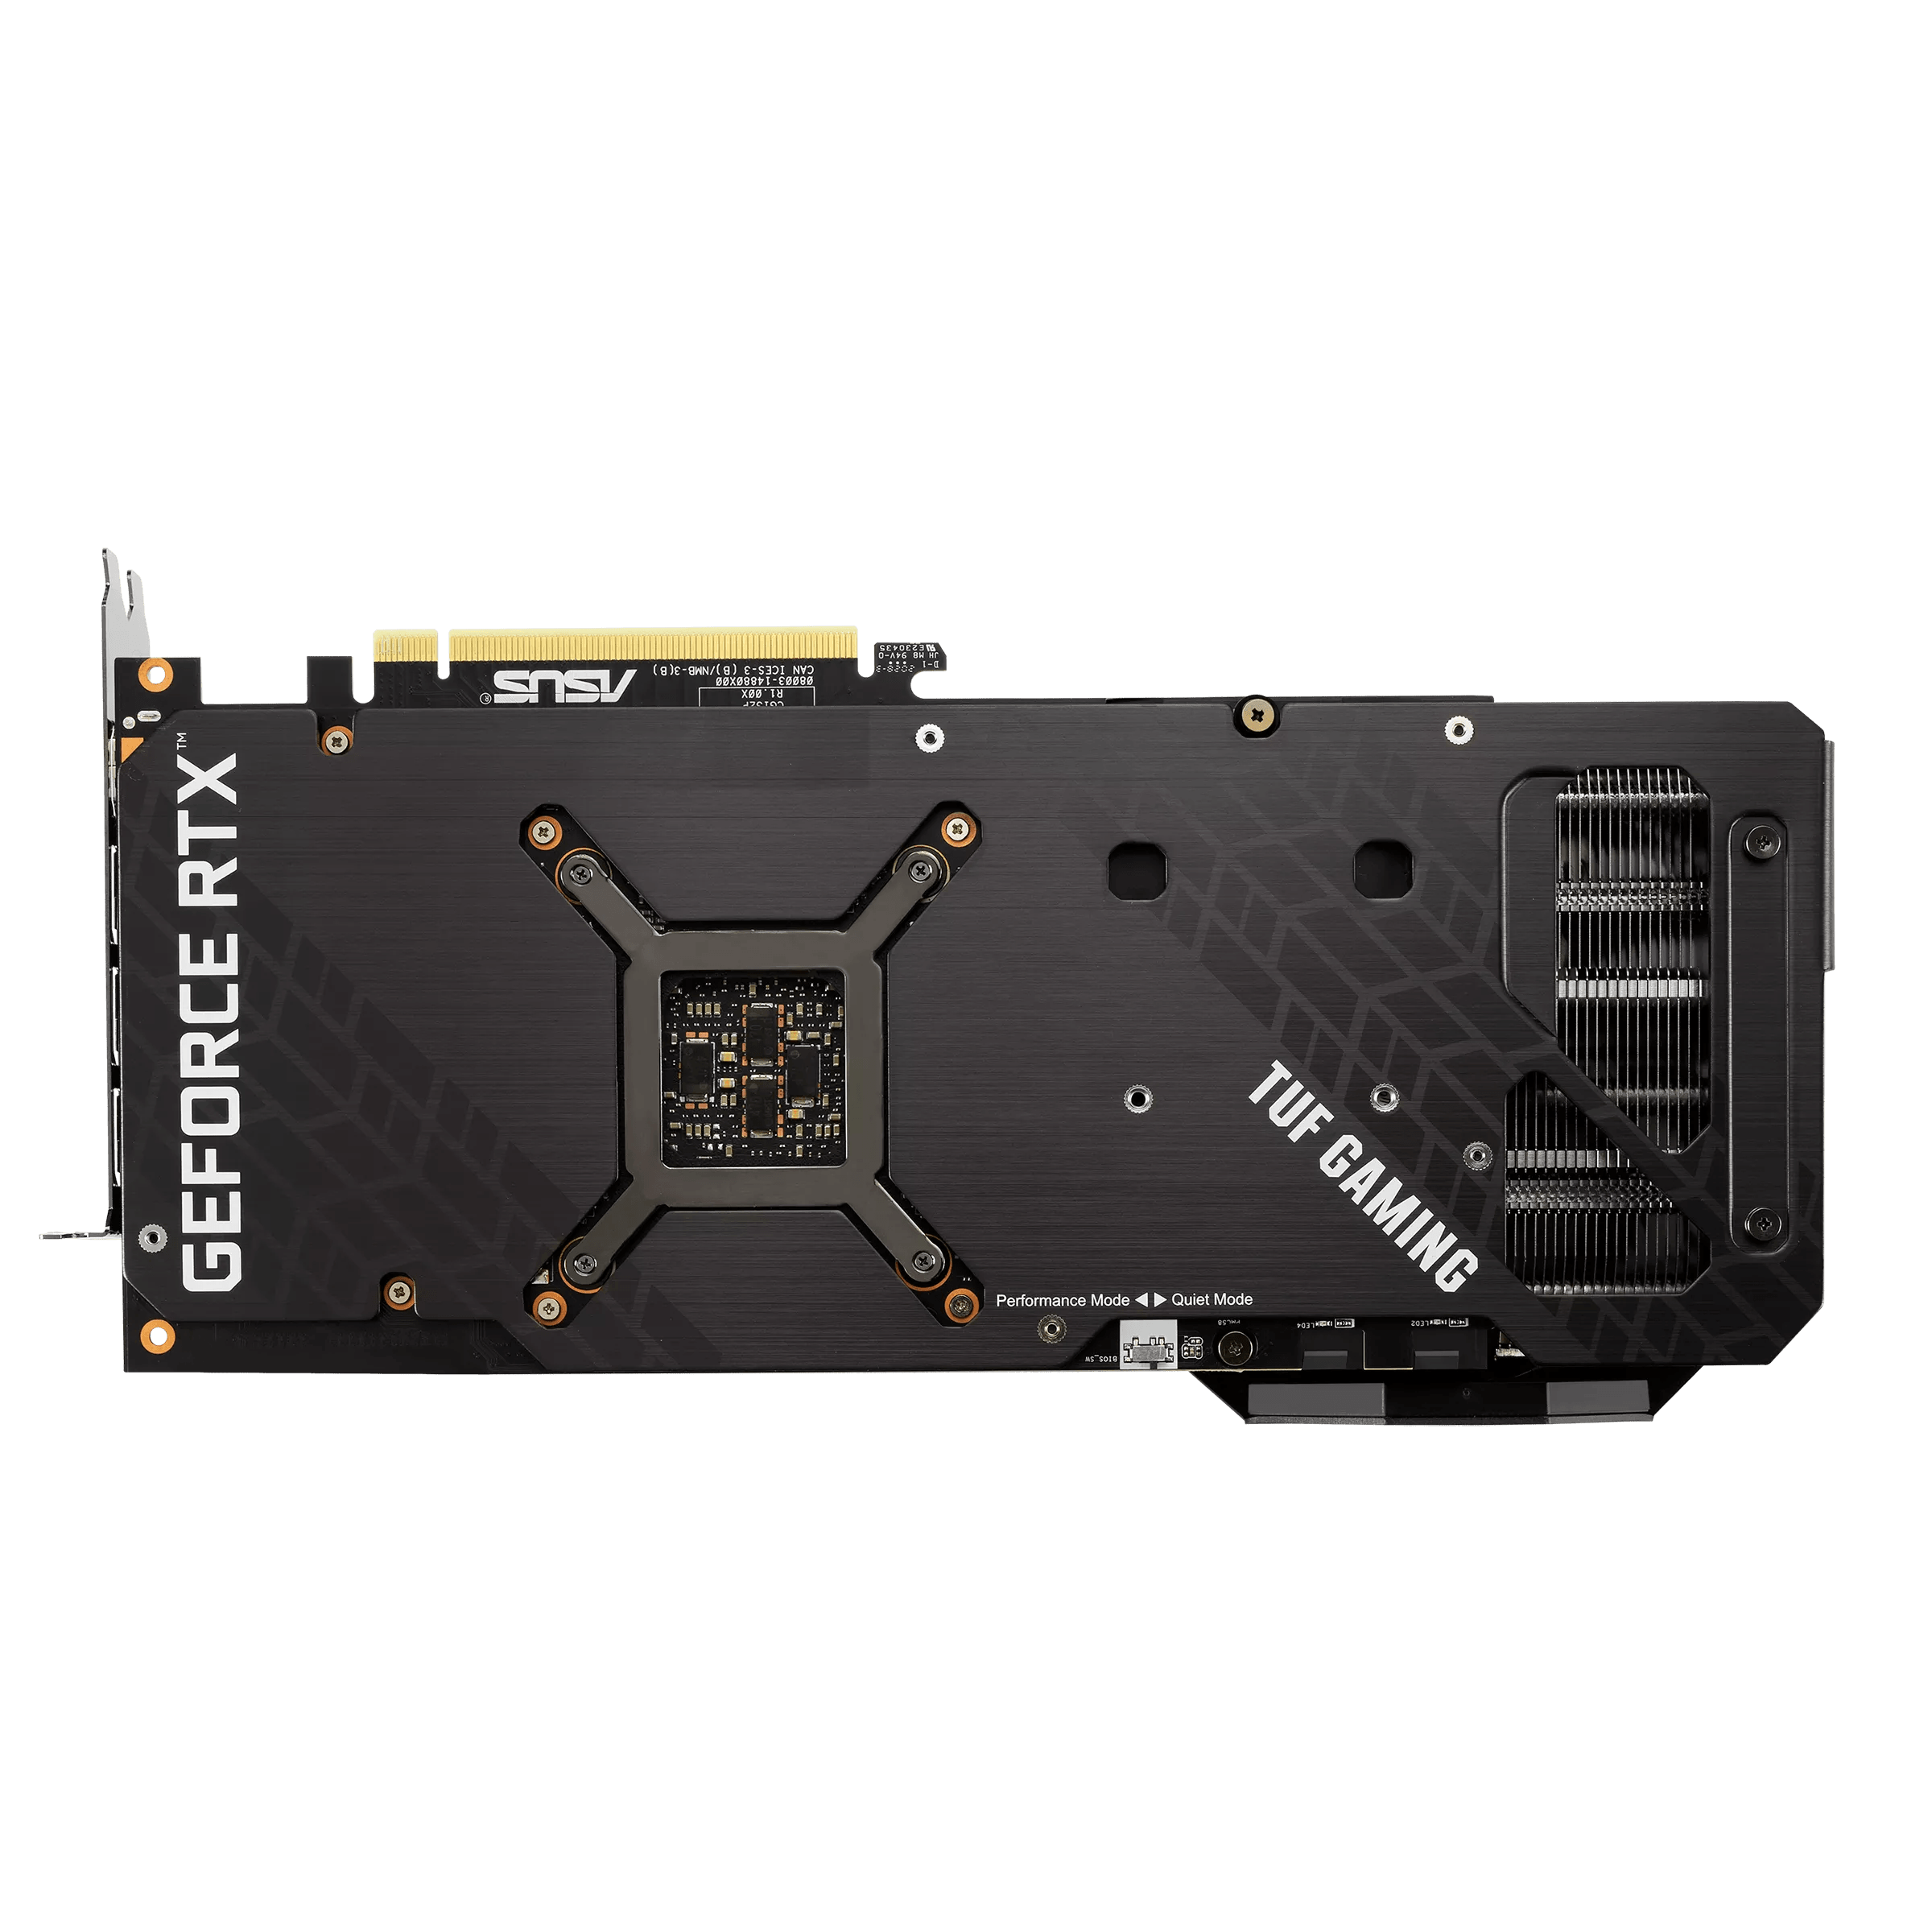 Asus TUF Gaming Geforce RTX 3070 Ti 8GB GDDR6X (Open Box) - Todo Geek